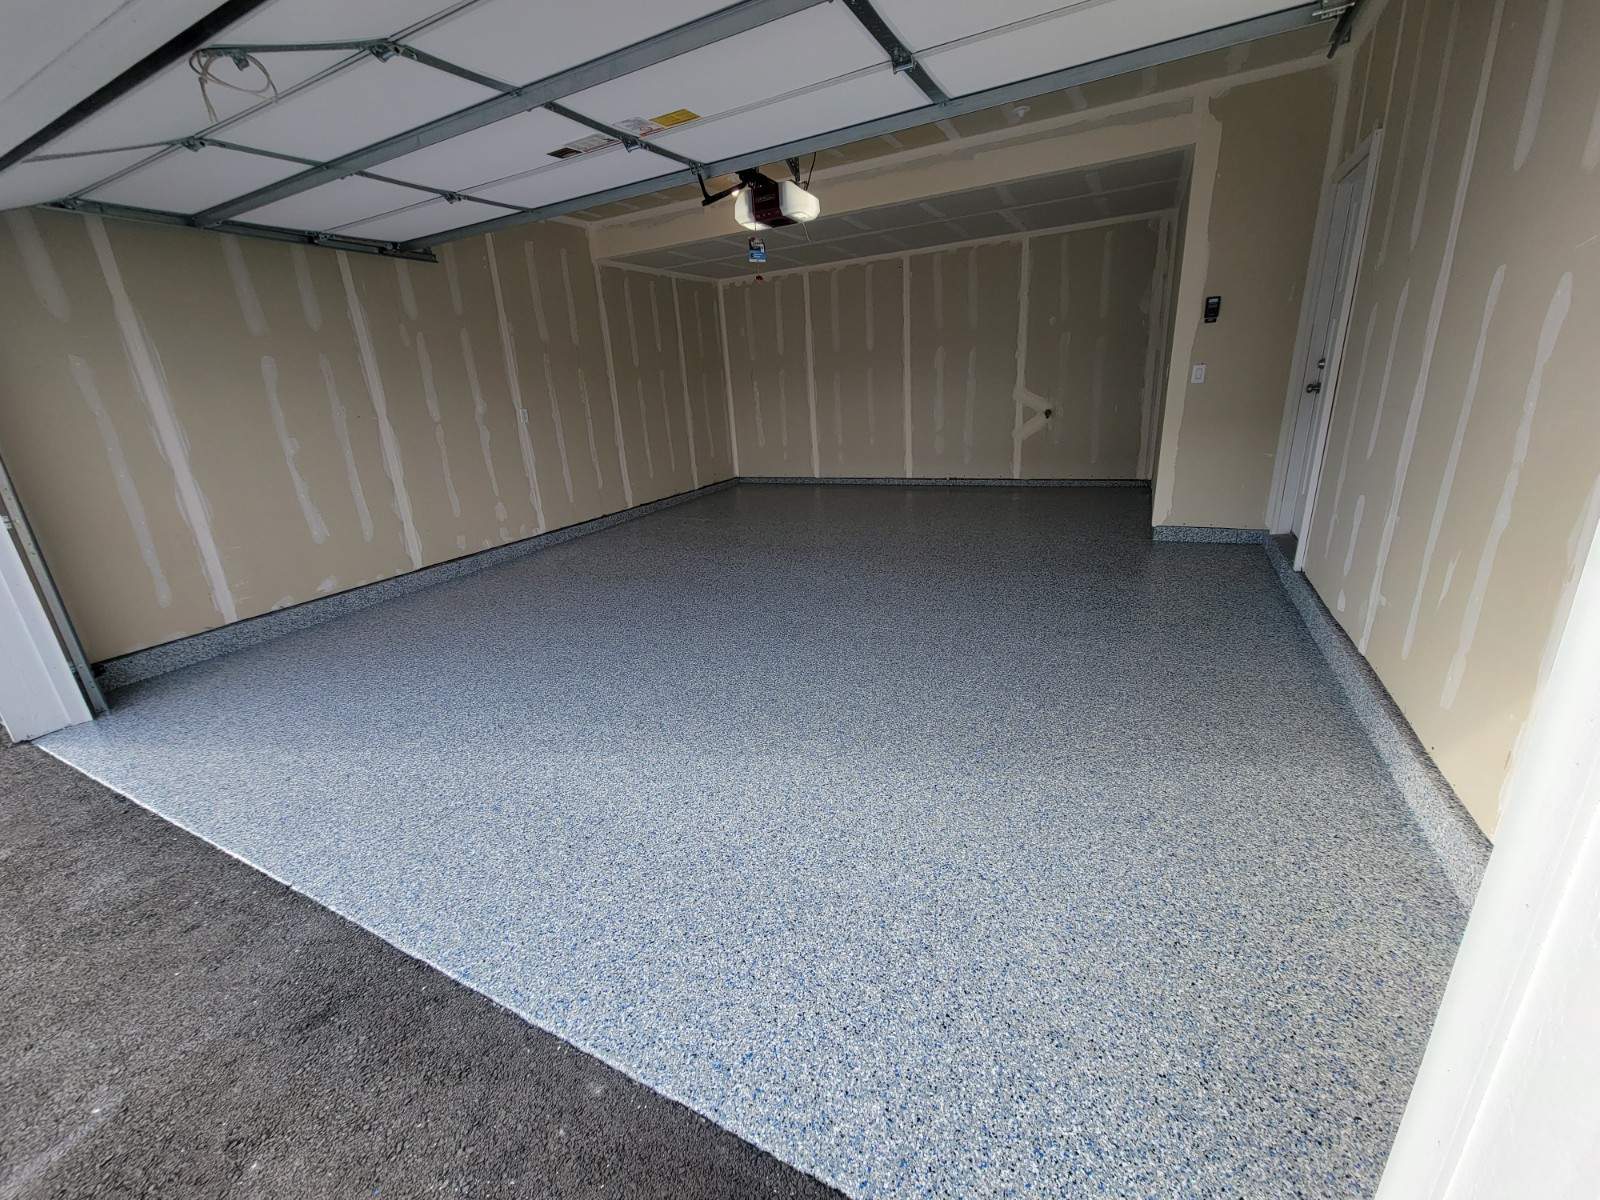 Epoxy garage floor coating morgan utah